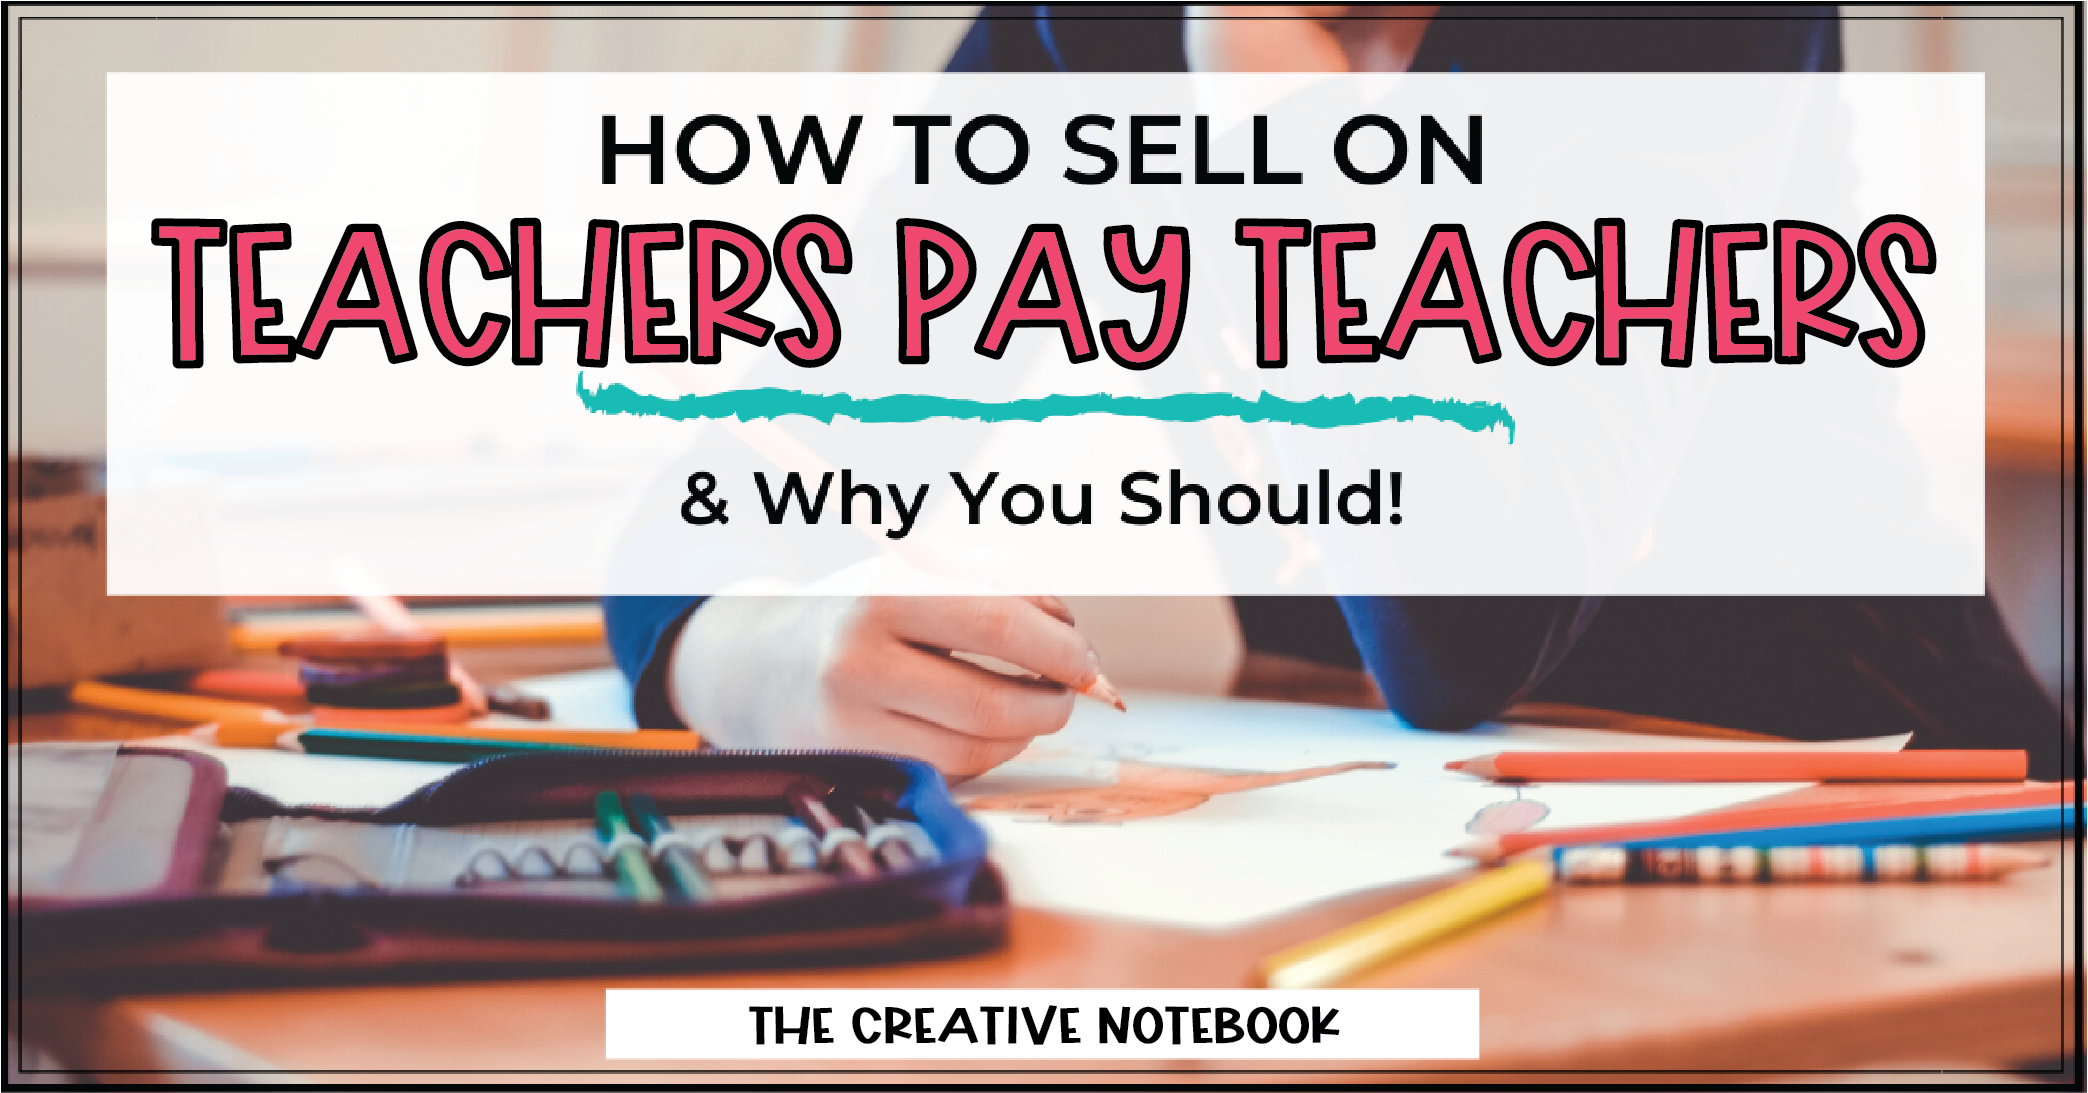 How to Sell on Teachers Pay Teachers - The Creative Notebook